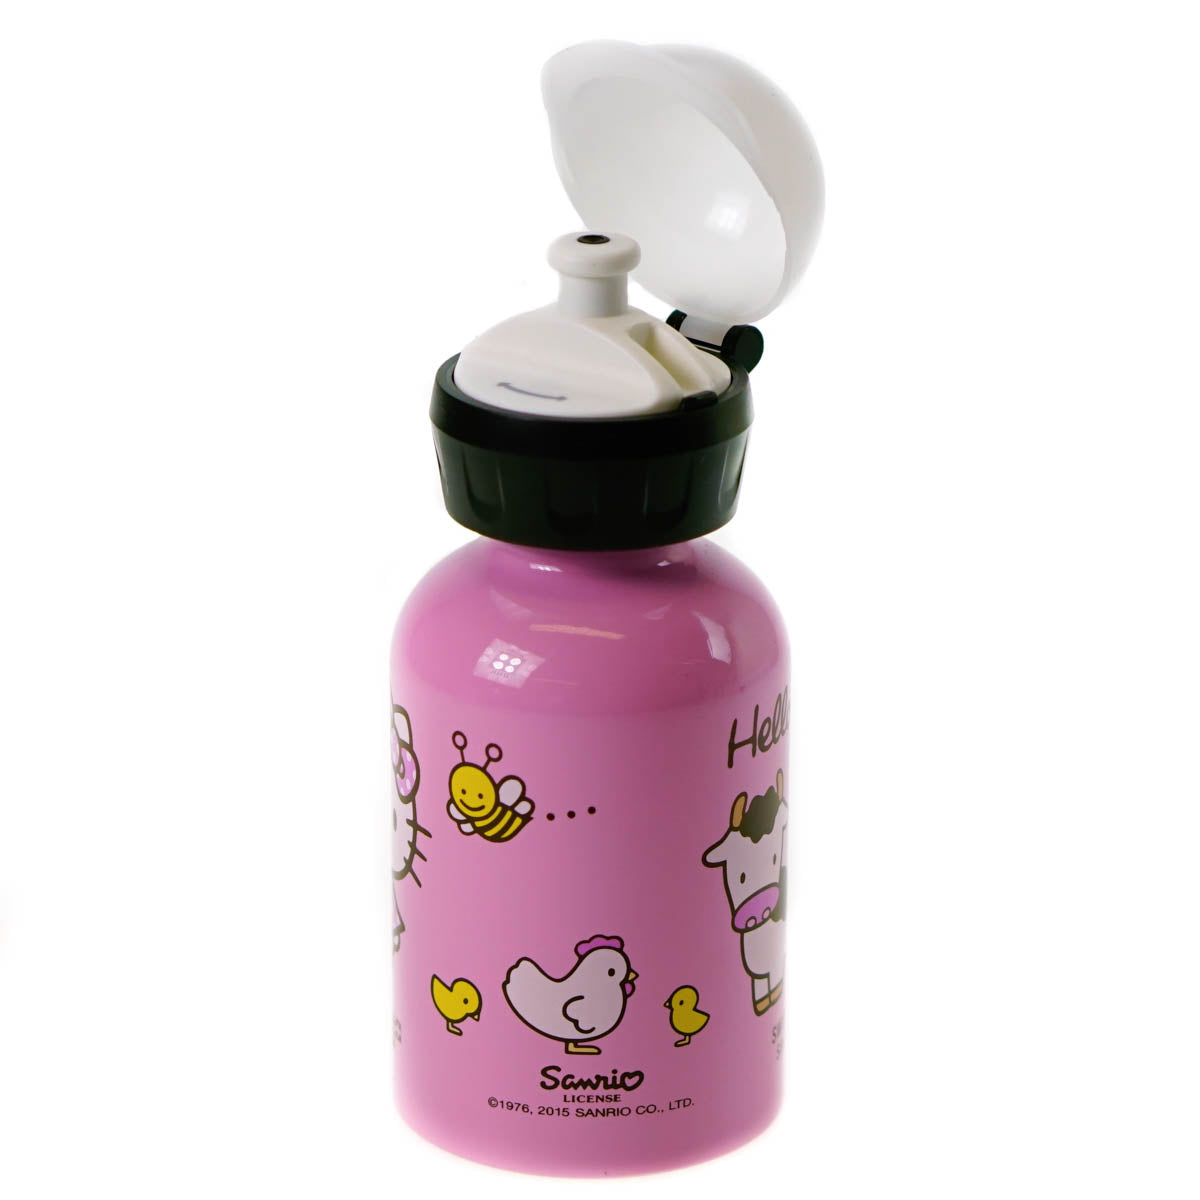 Water Bottle Hello Kitty Pink Children's Drinking by Sigg 